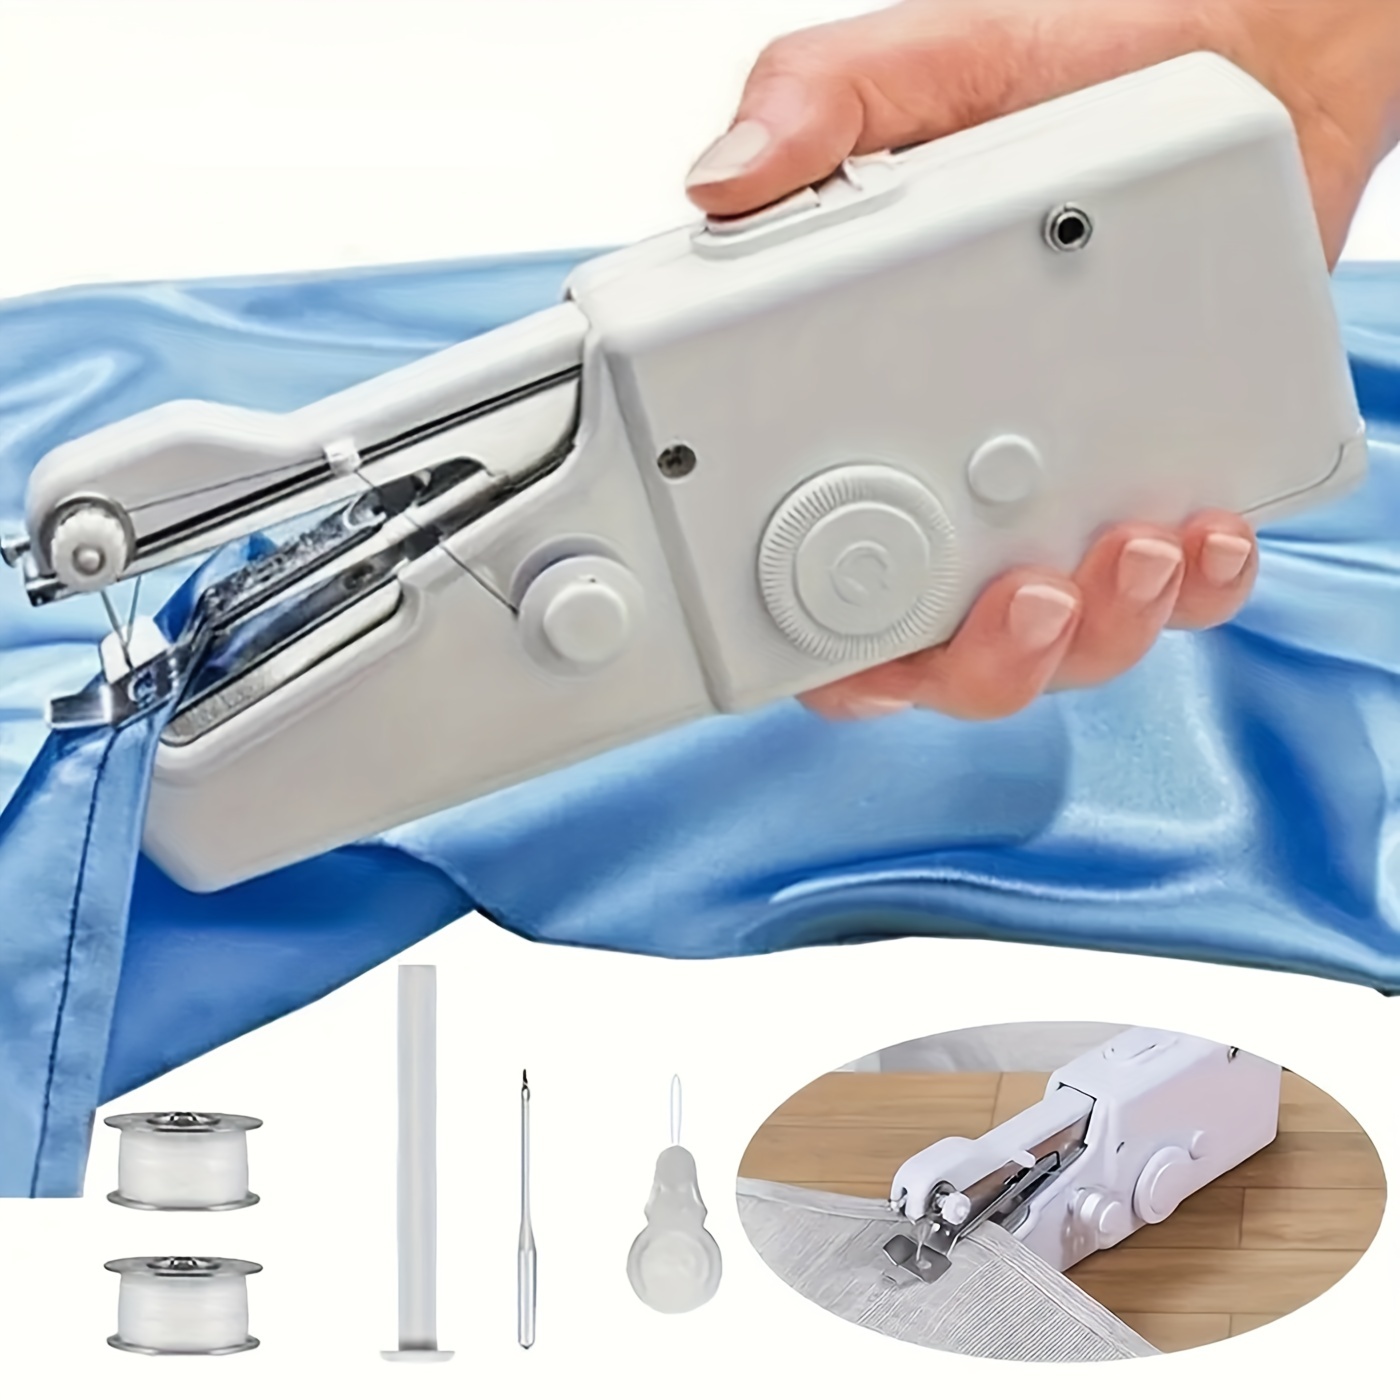 Portable Handheld Sewing Machine Cordless Electric Sewing Machine